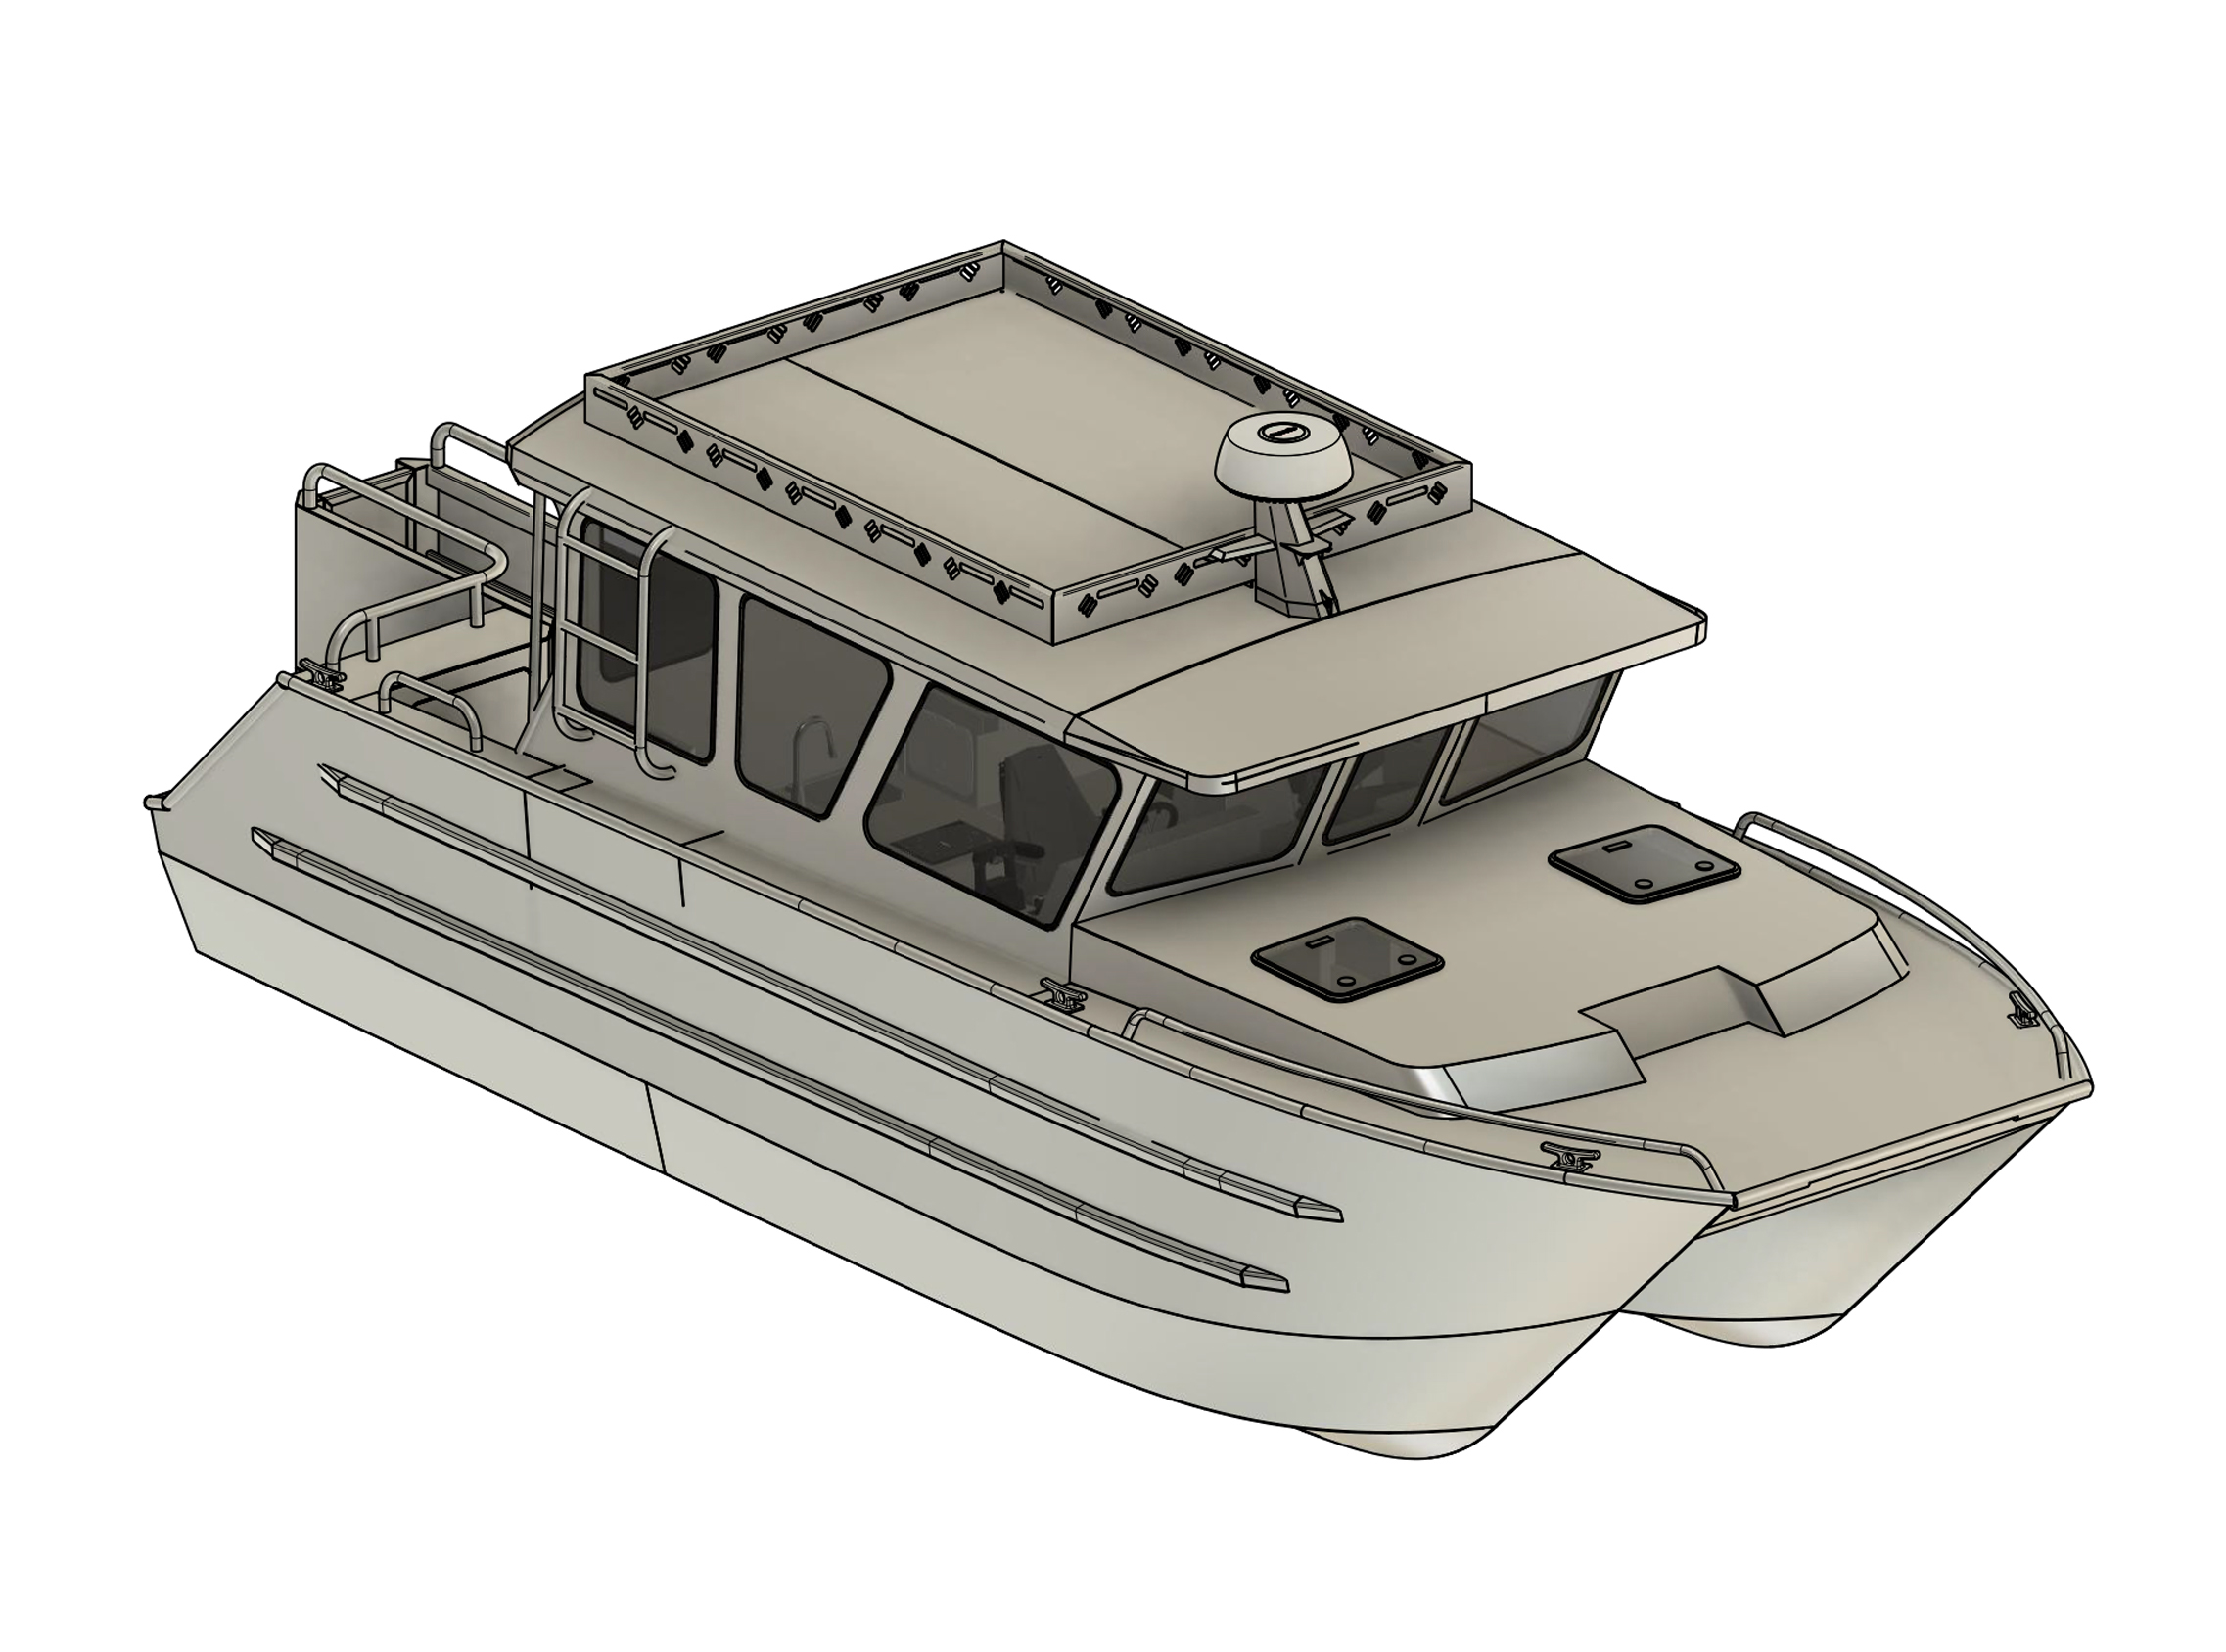 36' Welder Aluminum Catamaran - Cuddy Cabin by JR Marine